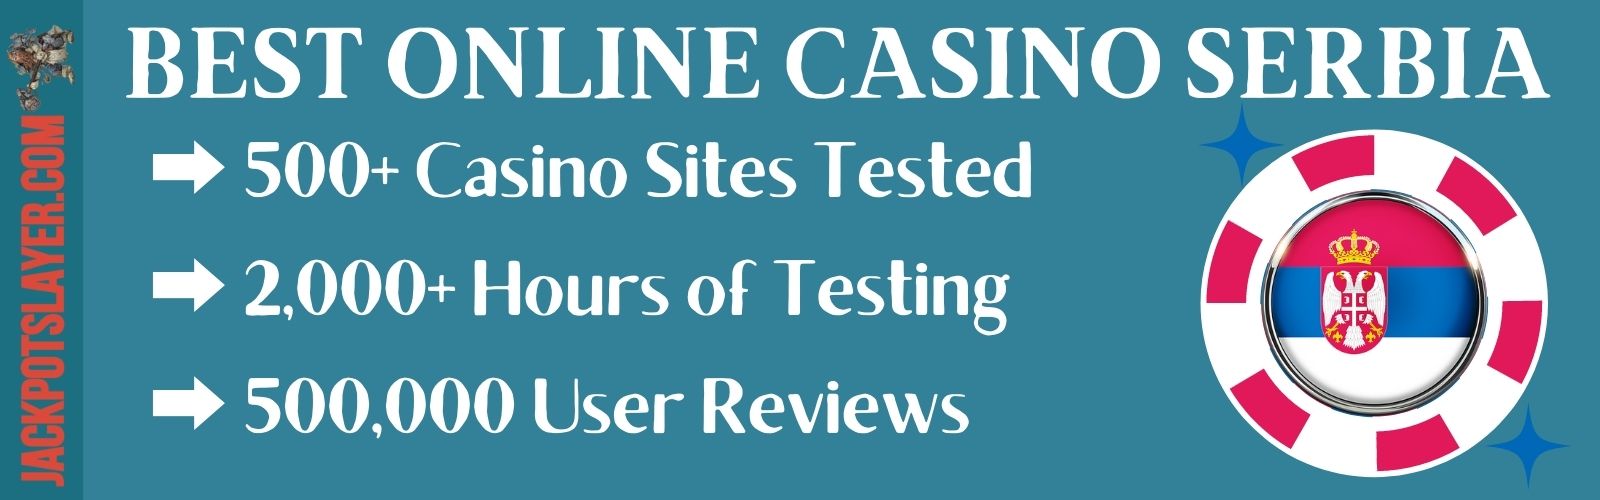 Online Casino Serbia